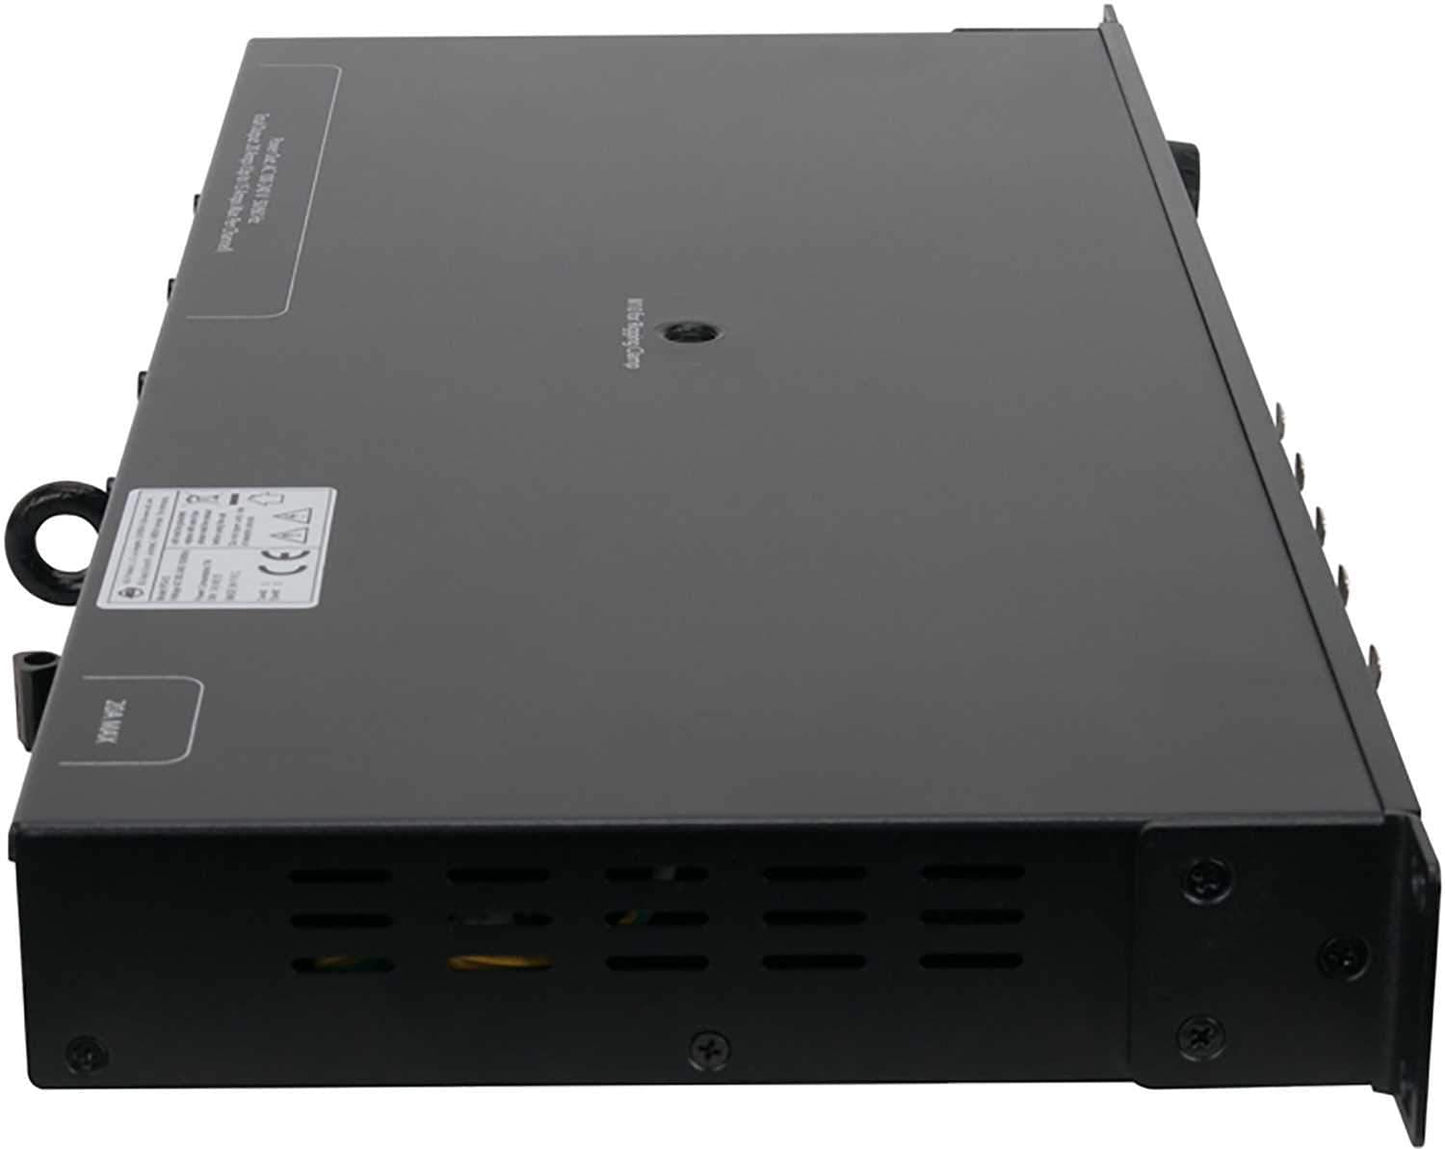 Elation IPC415 DMX Power Control Center - PSSL ProSound and Stage Lighting